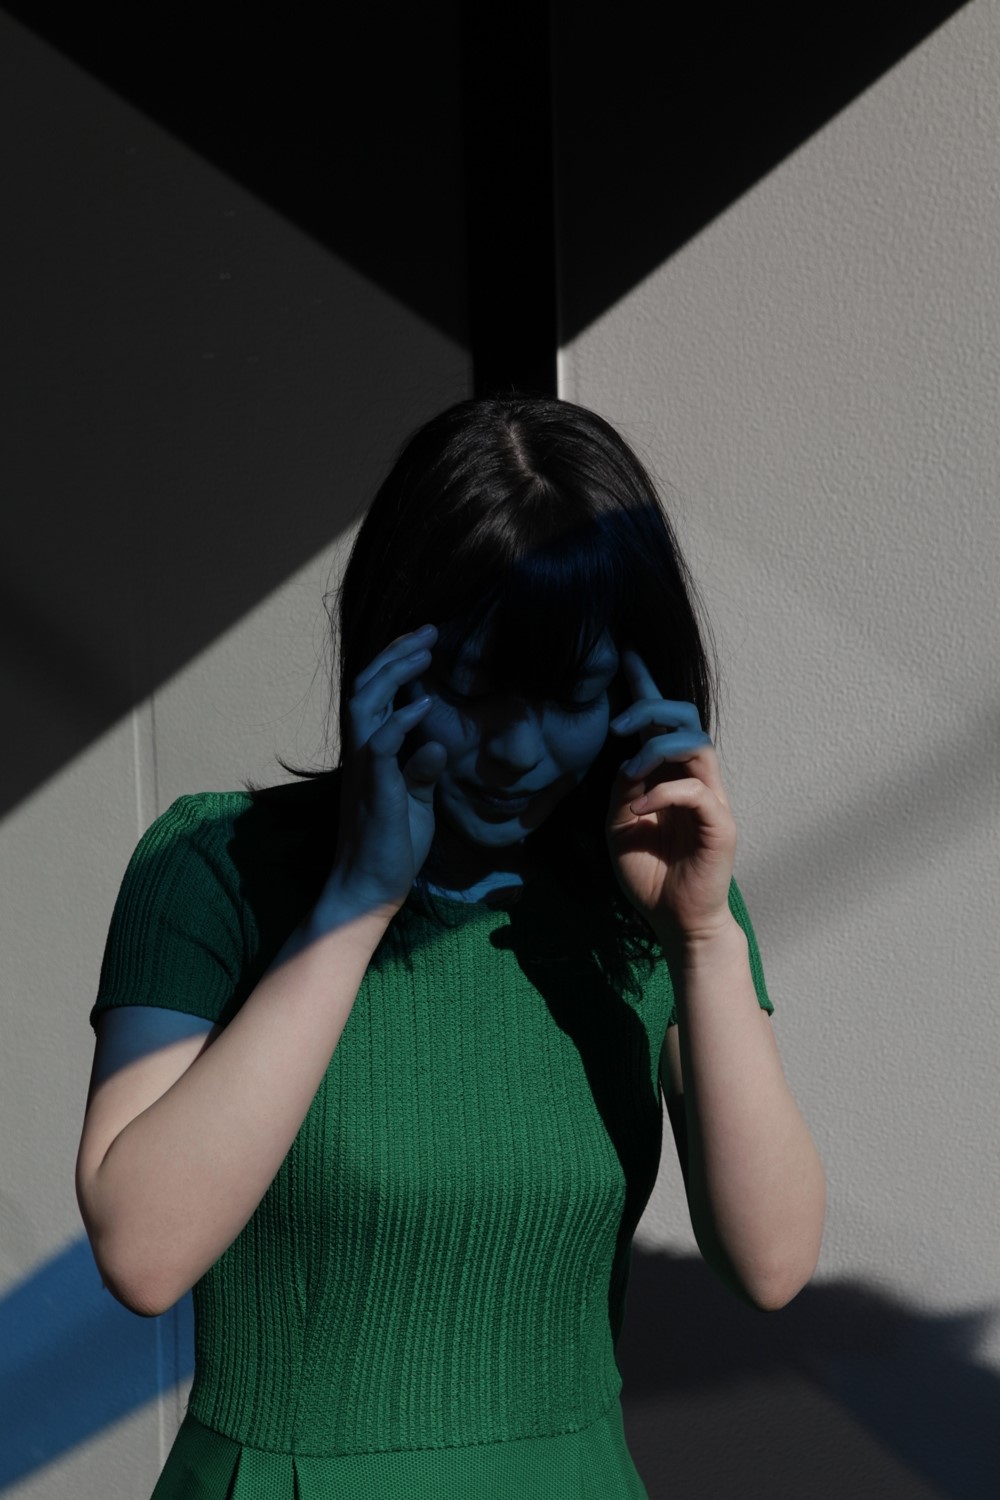 Viviane Sassen's Parallel Universe of Mirrors, Shadows and Dreams